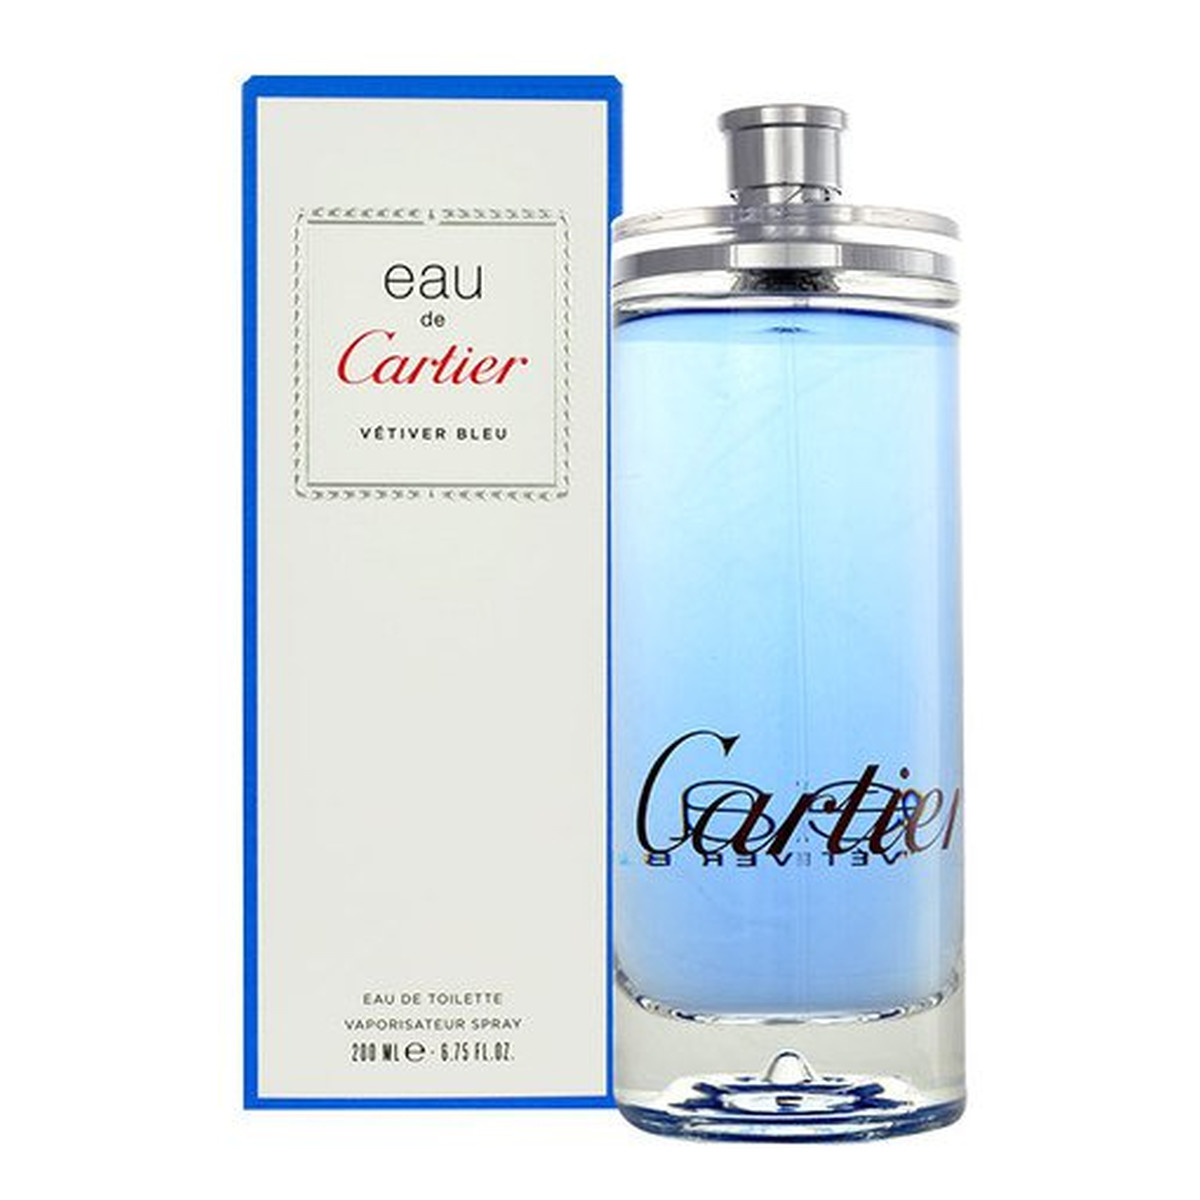 Cartier Eau de Cartier Vetiver Bleu woda toaletowa tester 100ml